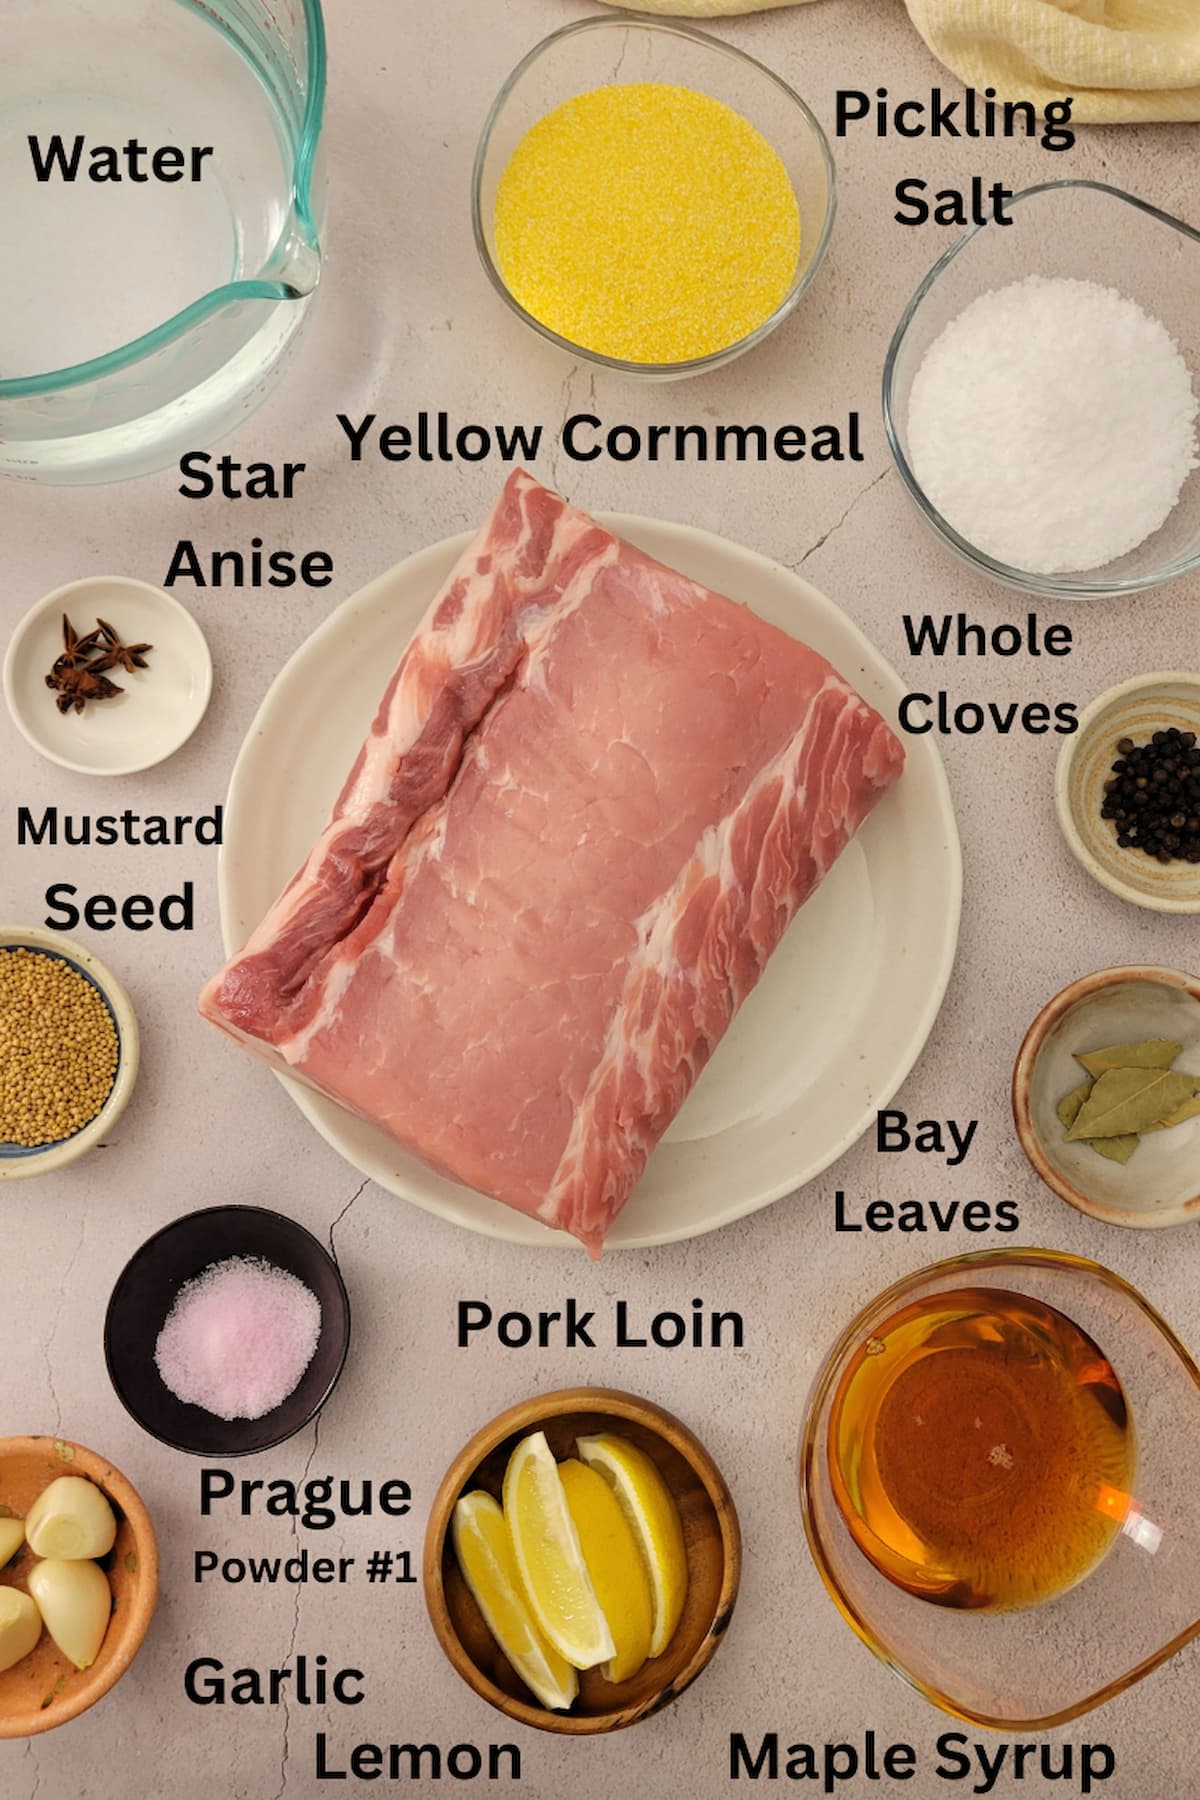 ingredients for peameal bacon - pork loin, yellow cornmeal, water, salt, star anise, mustard seed, prague powder#1, galic, lemon, maple syrup, bay leaves, whole cloves